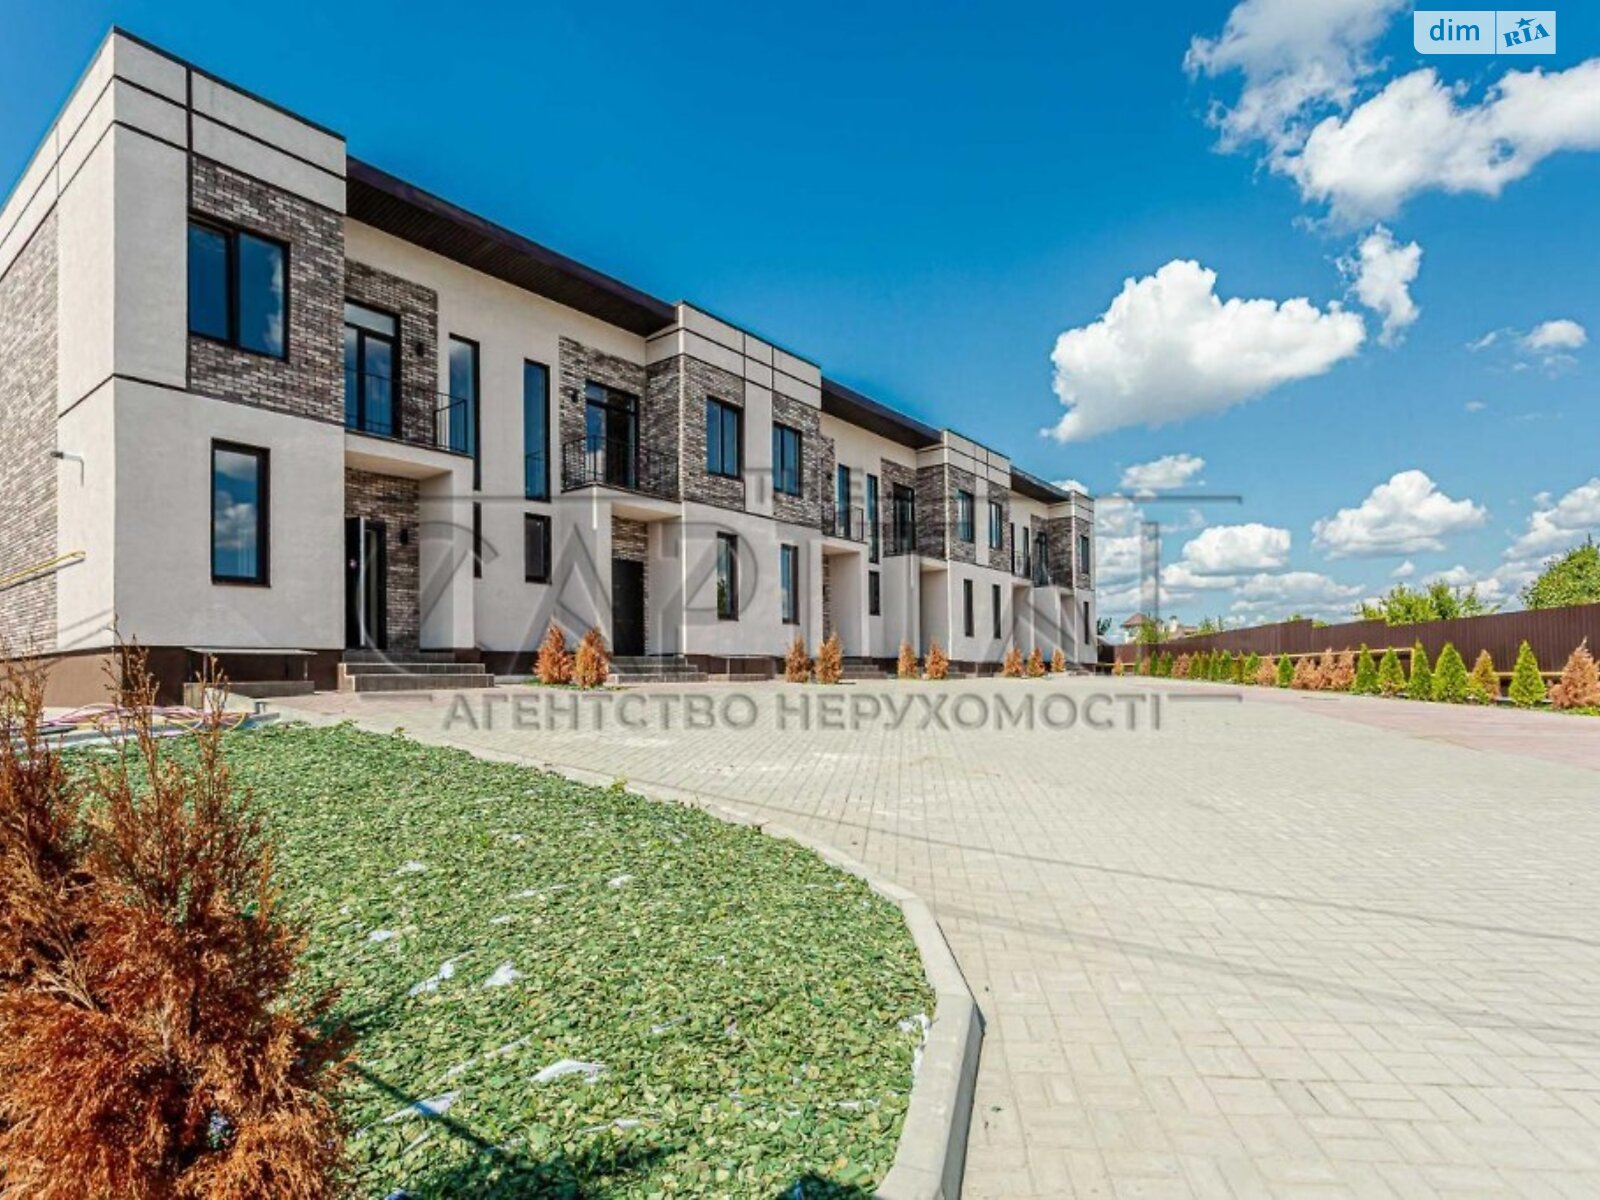 Продажа части дома в Гатном, улица Ярослава Мудрого, 3 комнаты фото 1